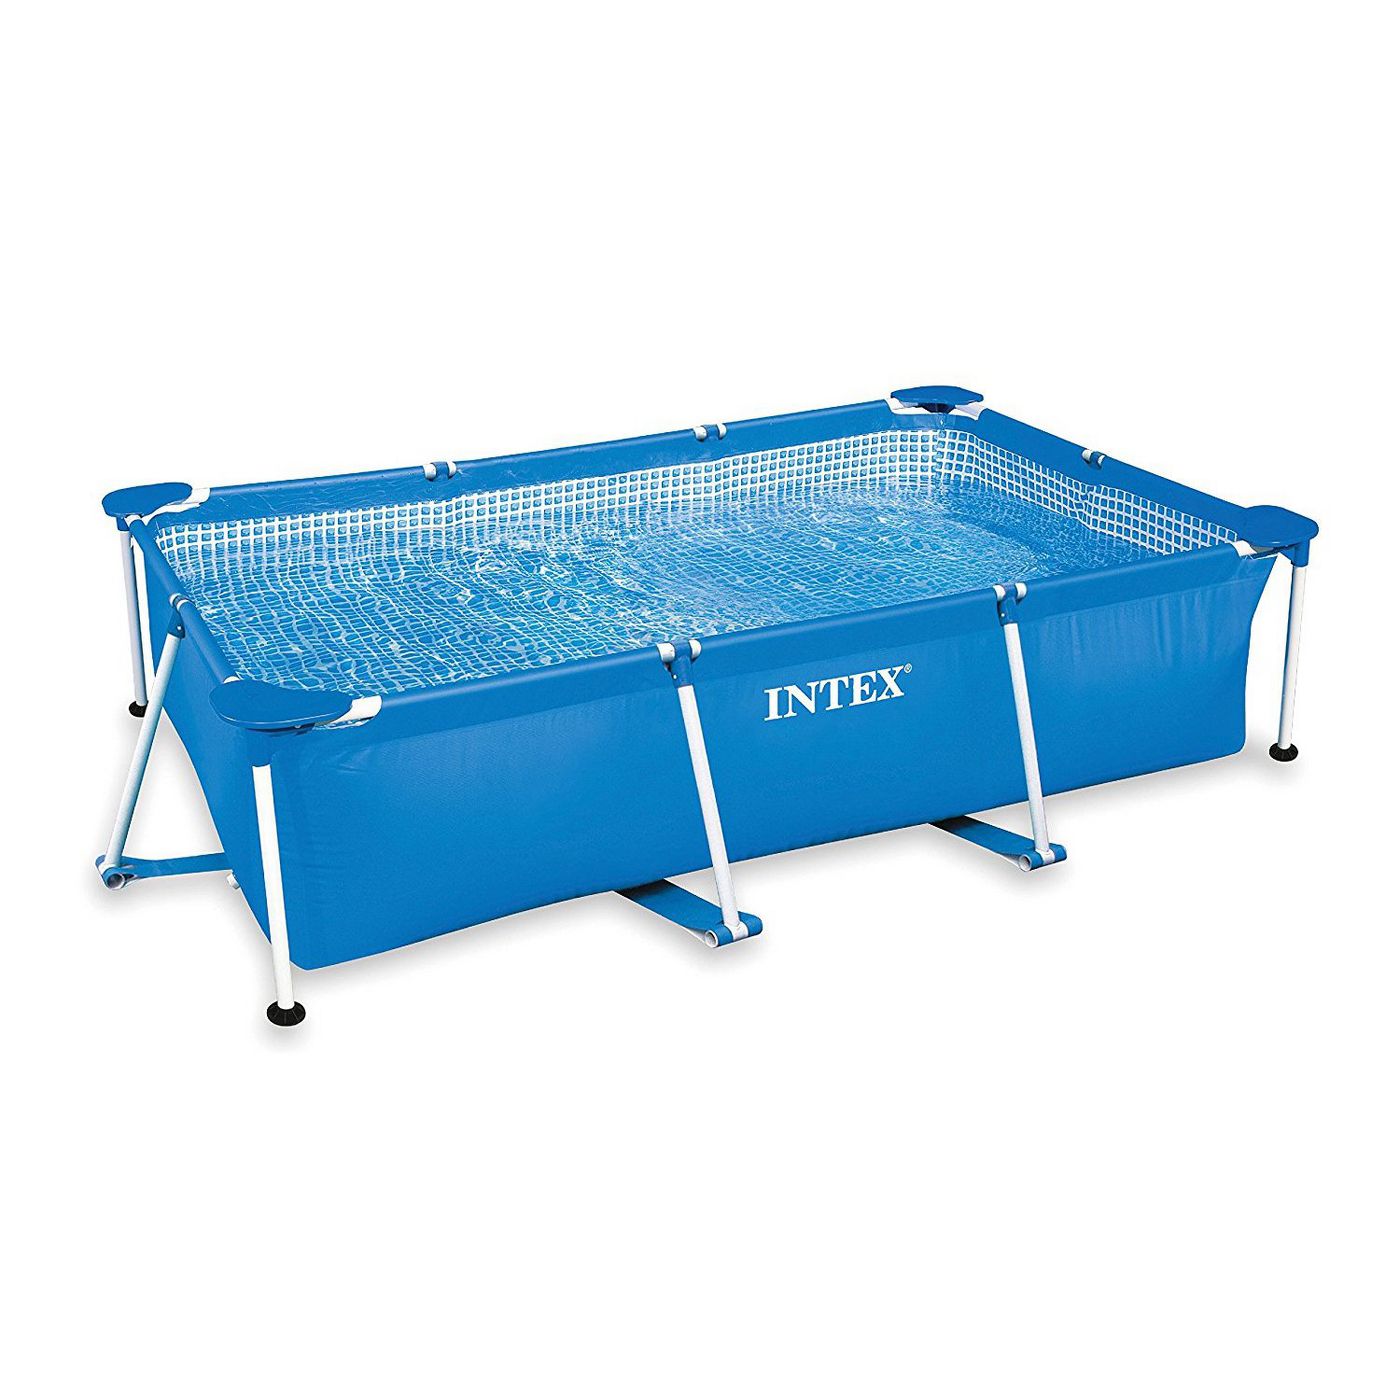 Intex 8.5ft x 26in Rectangular Frame Above Ground Backyard Swimming Pool, Blue - image 1 of 6